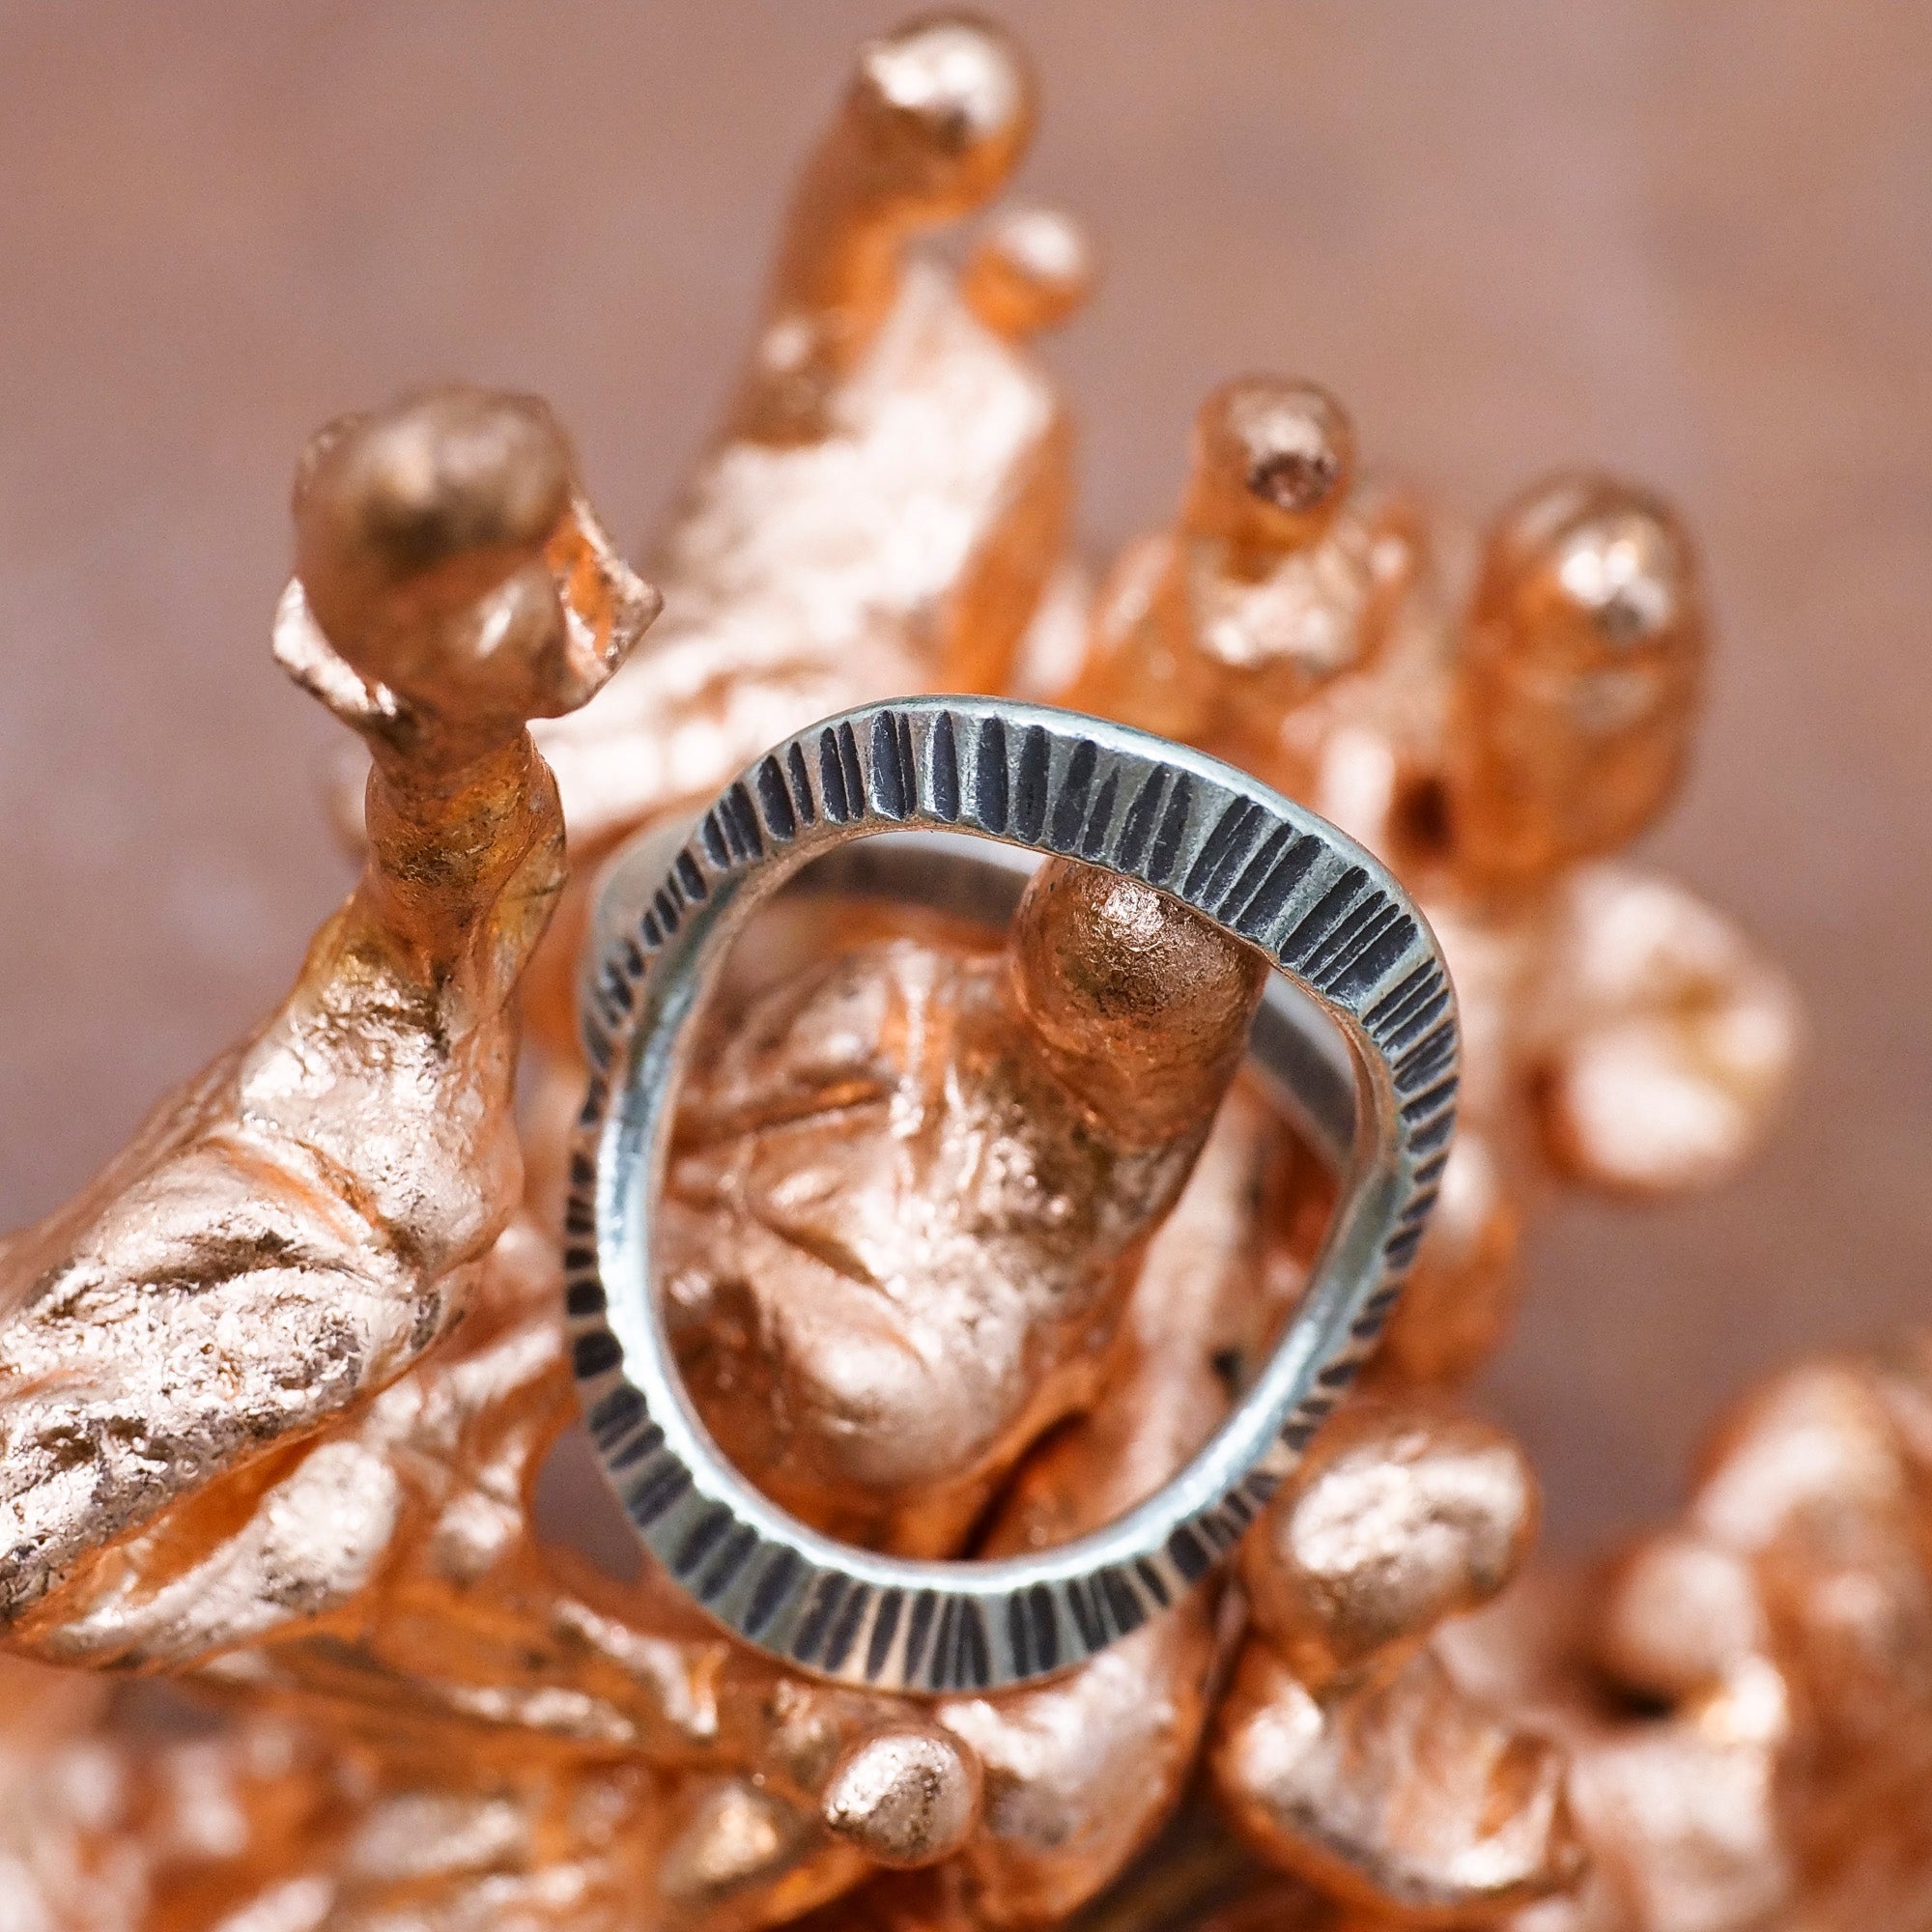 Open Circle Stamped Ring Jewelry: Ring Anantara Silver 